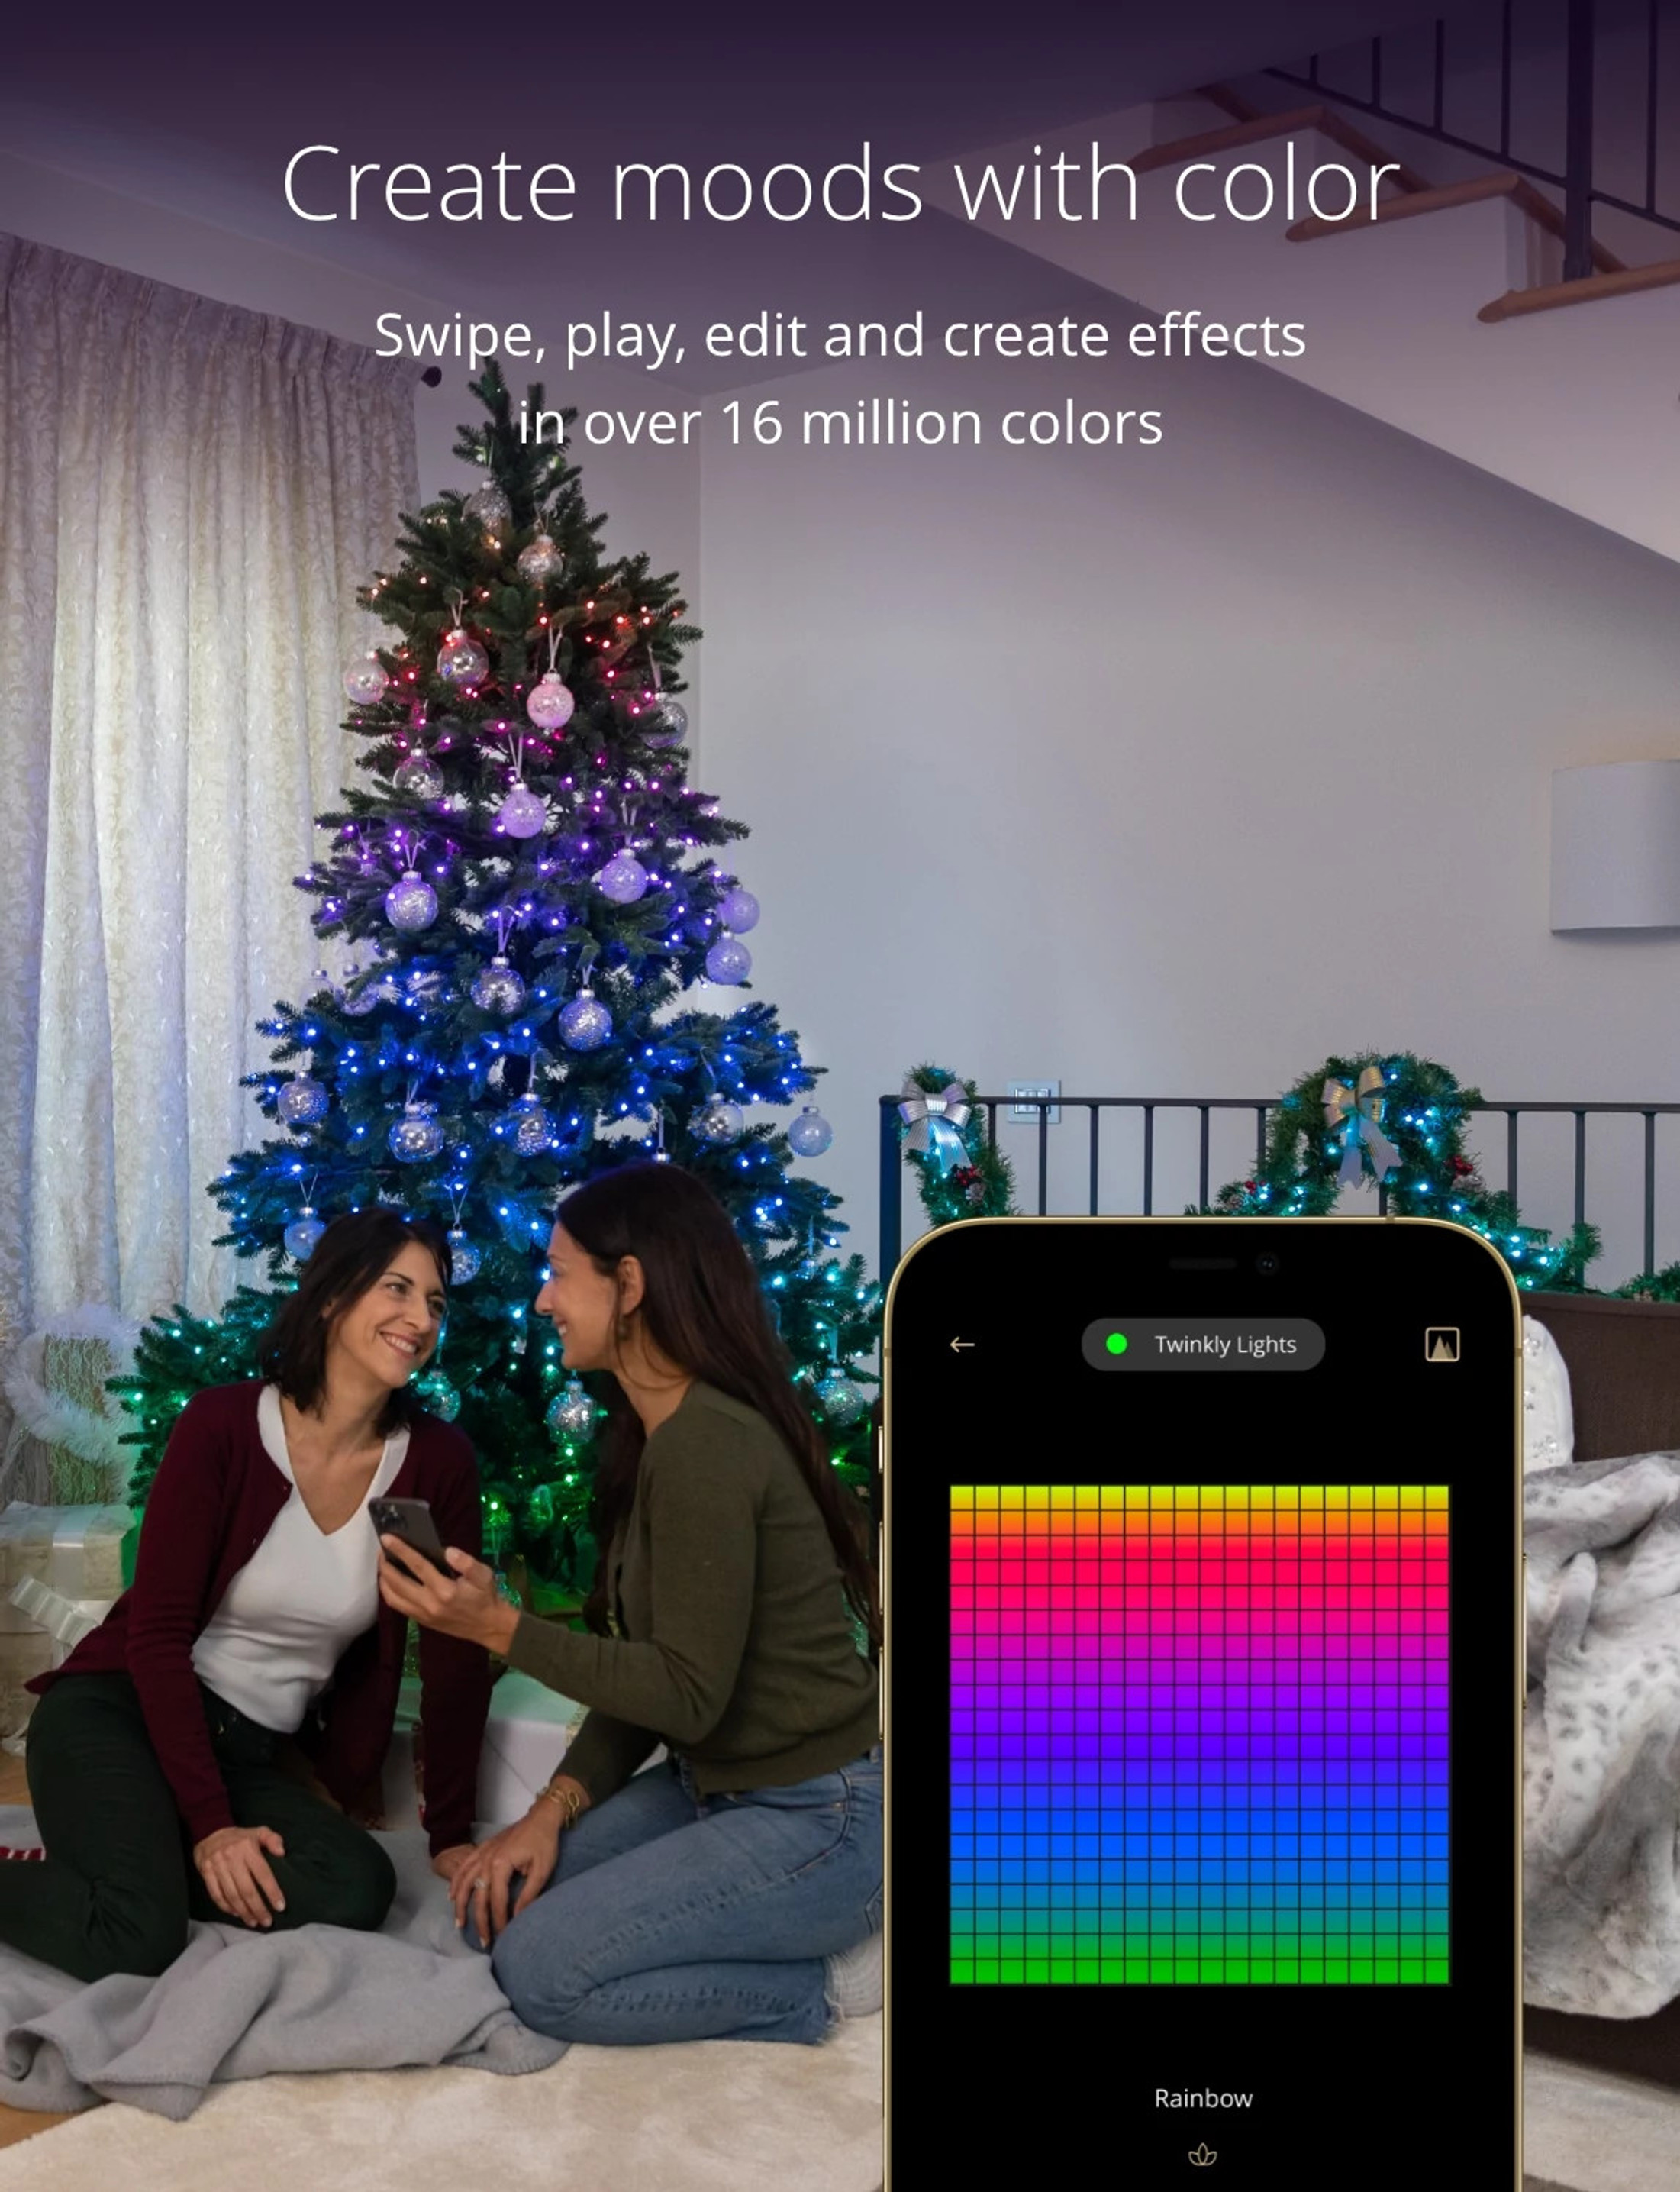 7 Ft Plug in Christmas Tree Lights RGB 400 LED Animated Remote